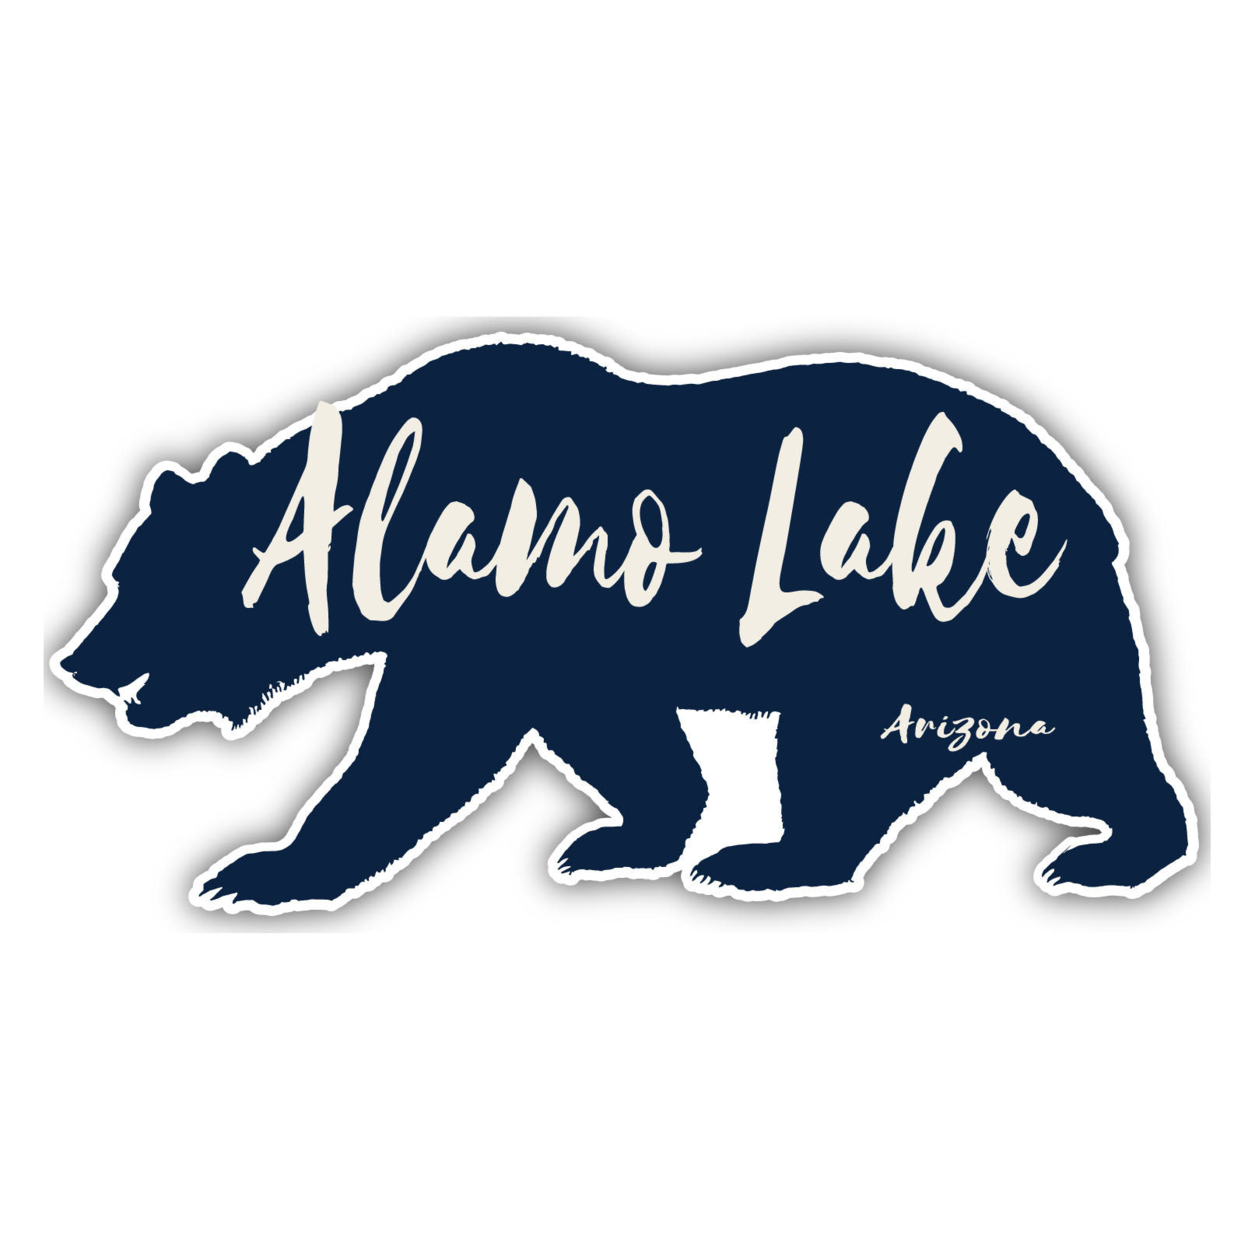 Alamo Lake Arizona Souvenir Decorative Stickers (Choose Theme And Size) - 4-Pack, 12-Inch, Tent